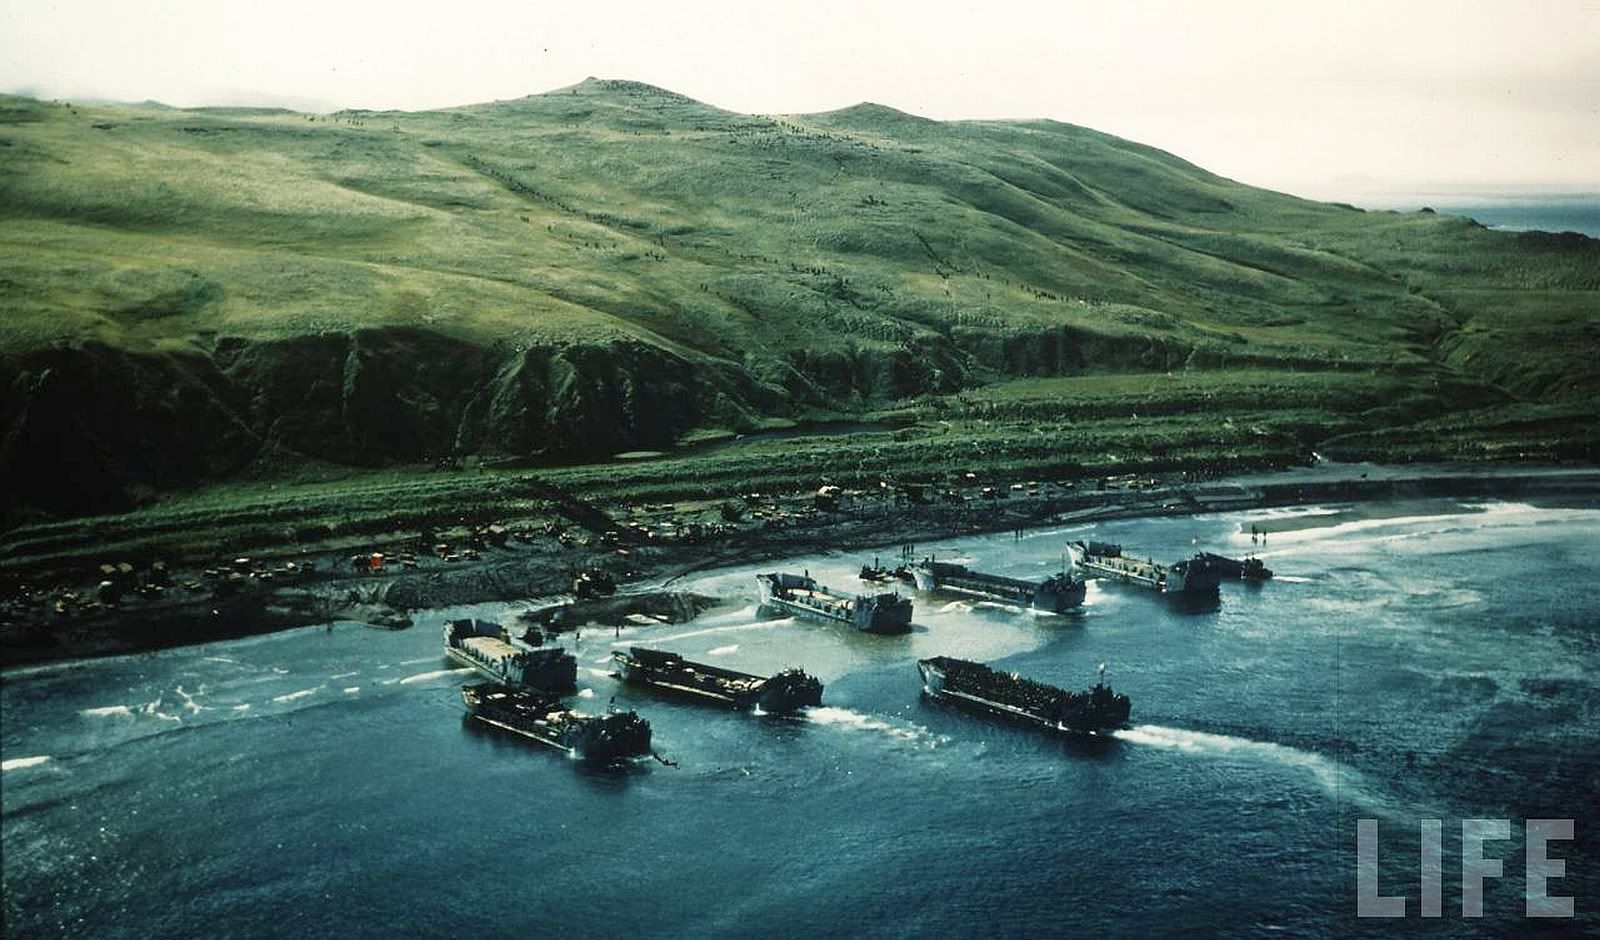 Kiska Island, Aleutians 1943 (note files of troops making their way up hills). Aleutian islands, Kiska, Wwii